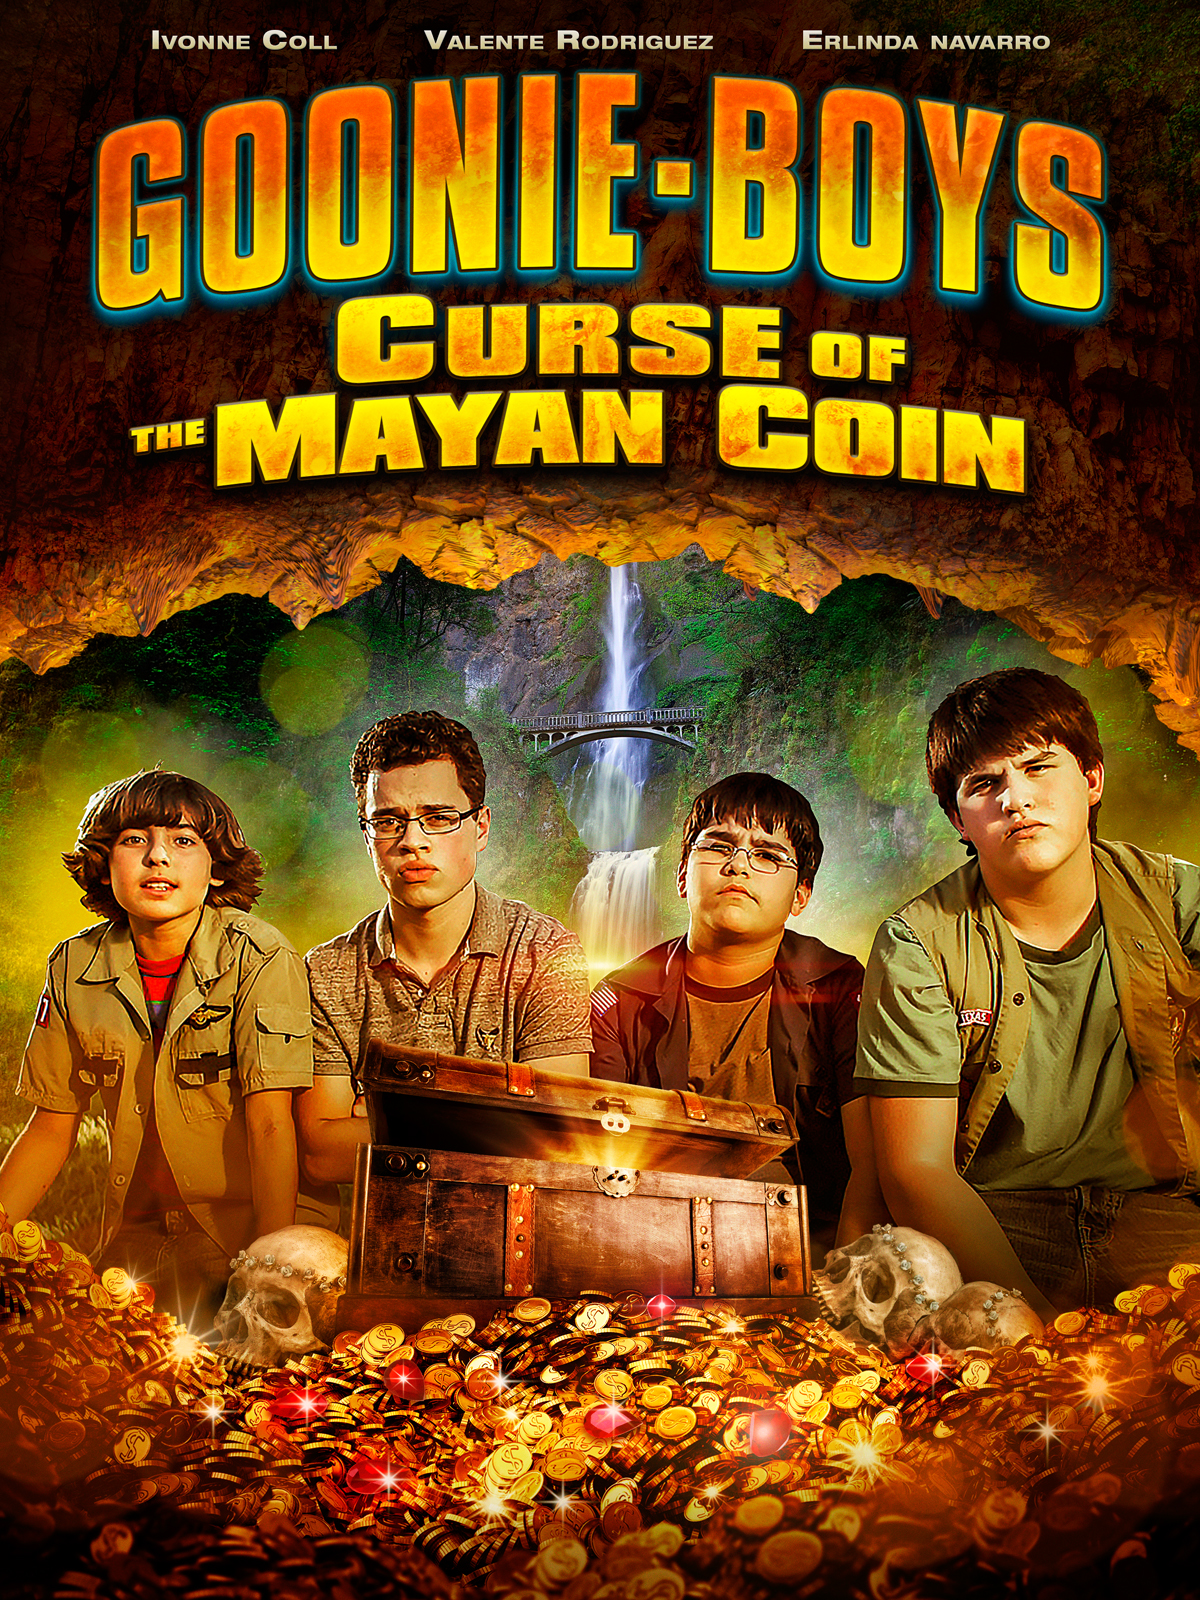 Goonie-Boys: Curse of the Mayan Coin (2014) Screenshot 2 